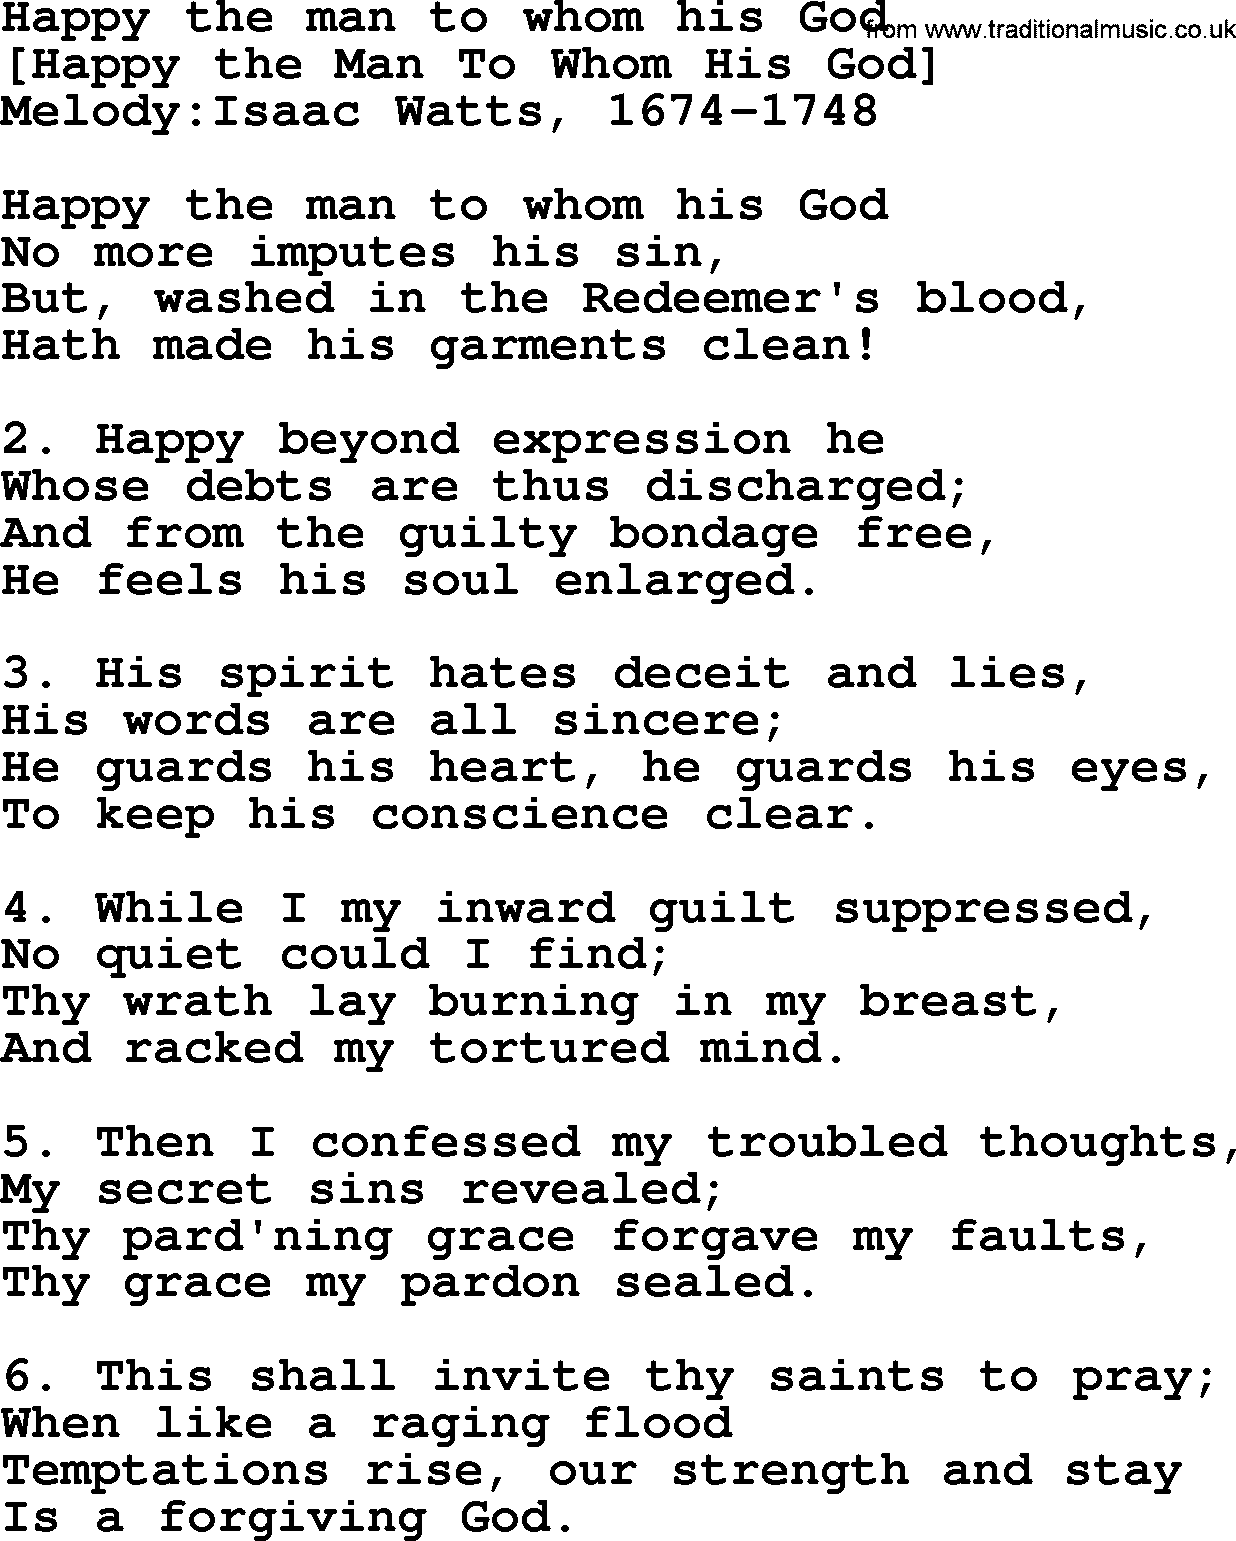 Old English Song: Happy The Man To Whom His God lyrics